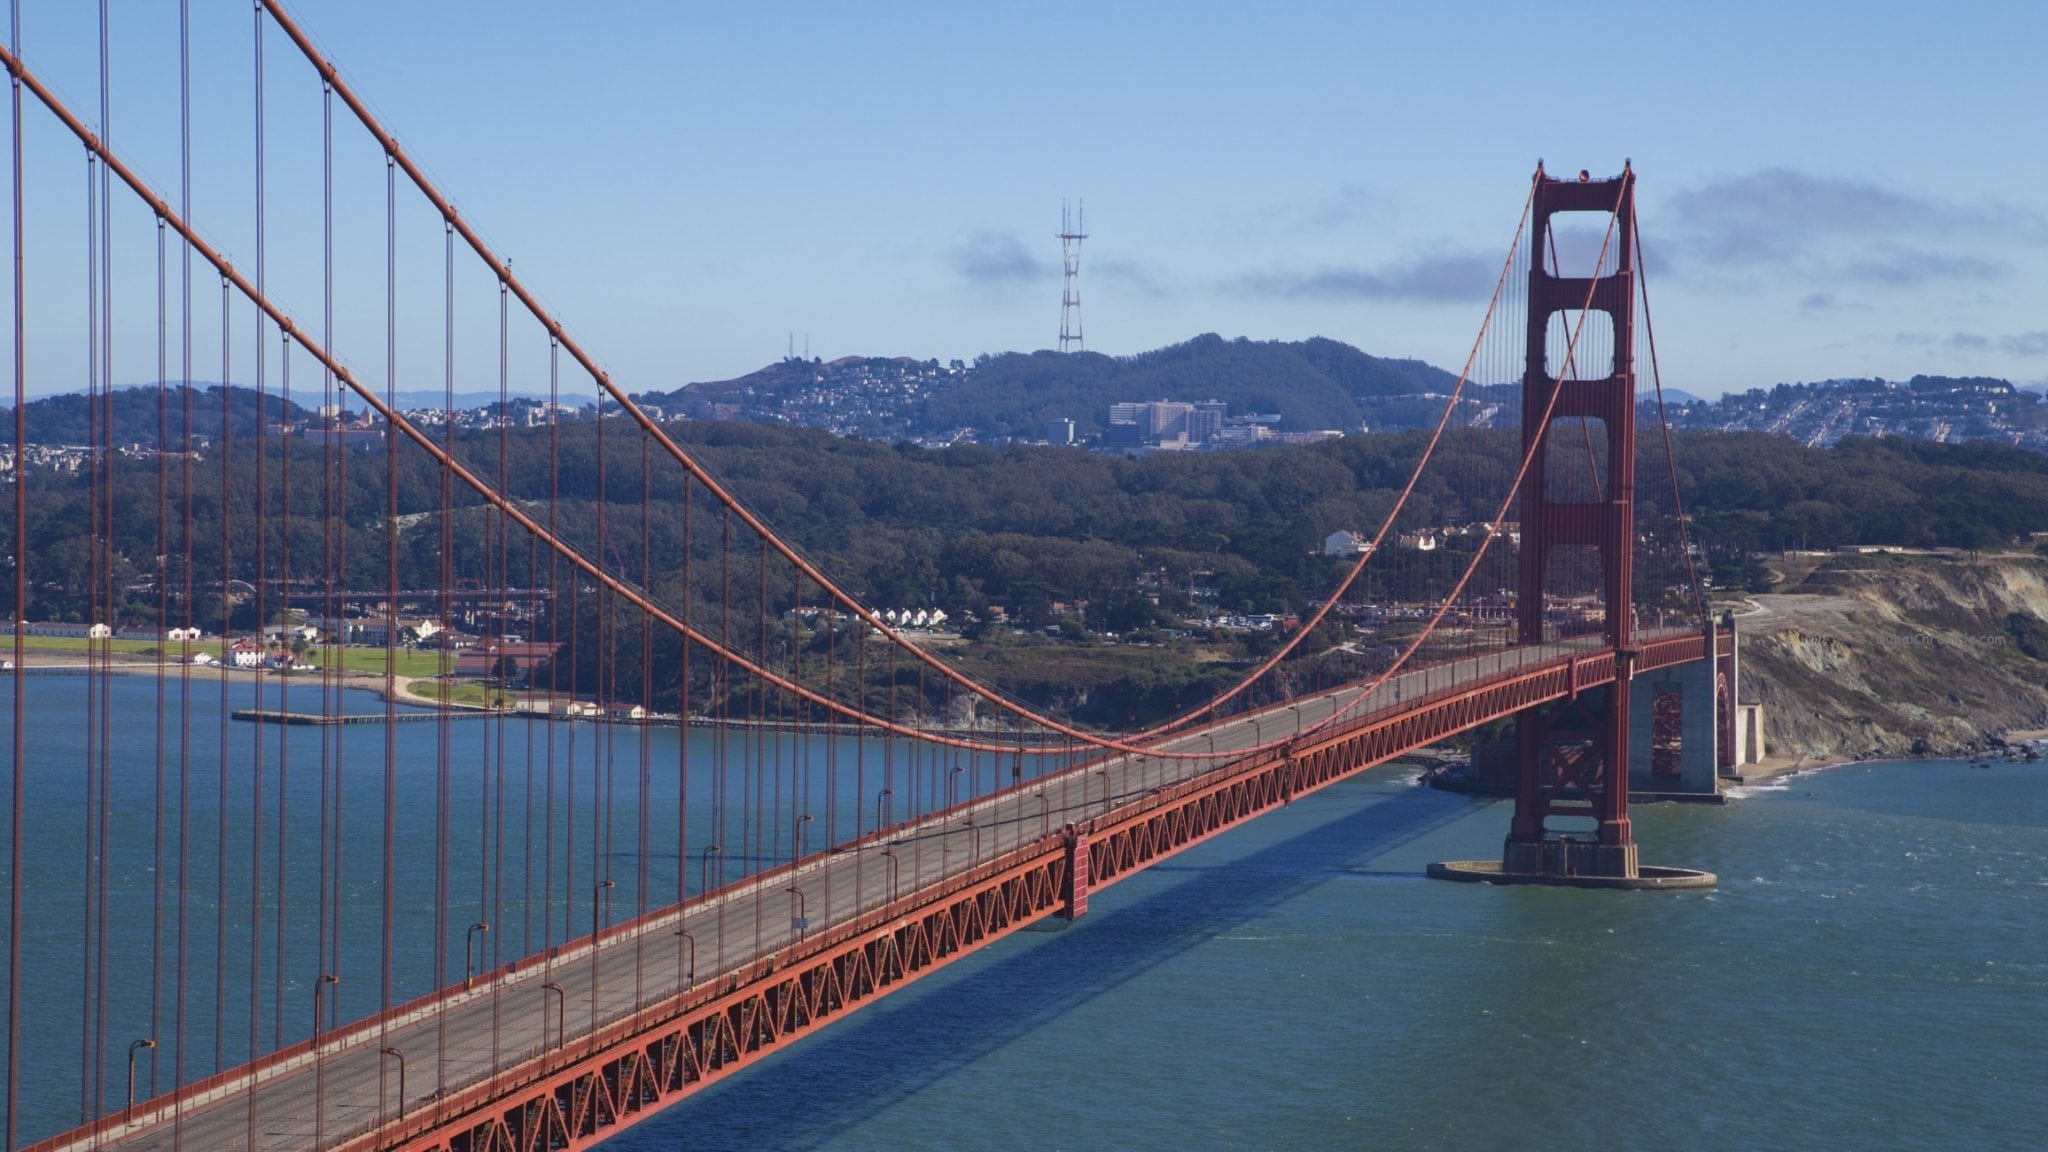 The iconic Golden Gate Bridge in San Francisco